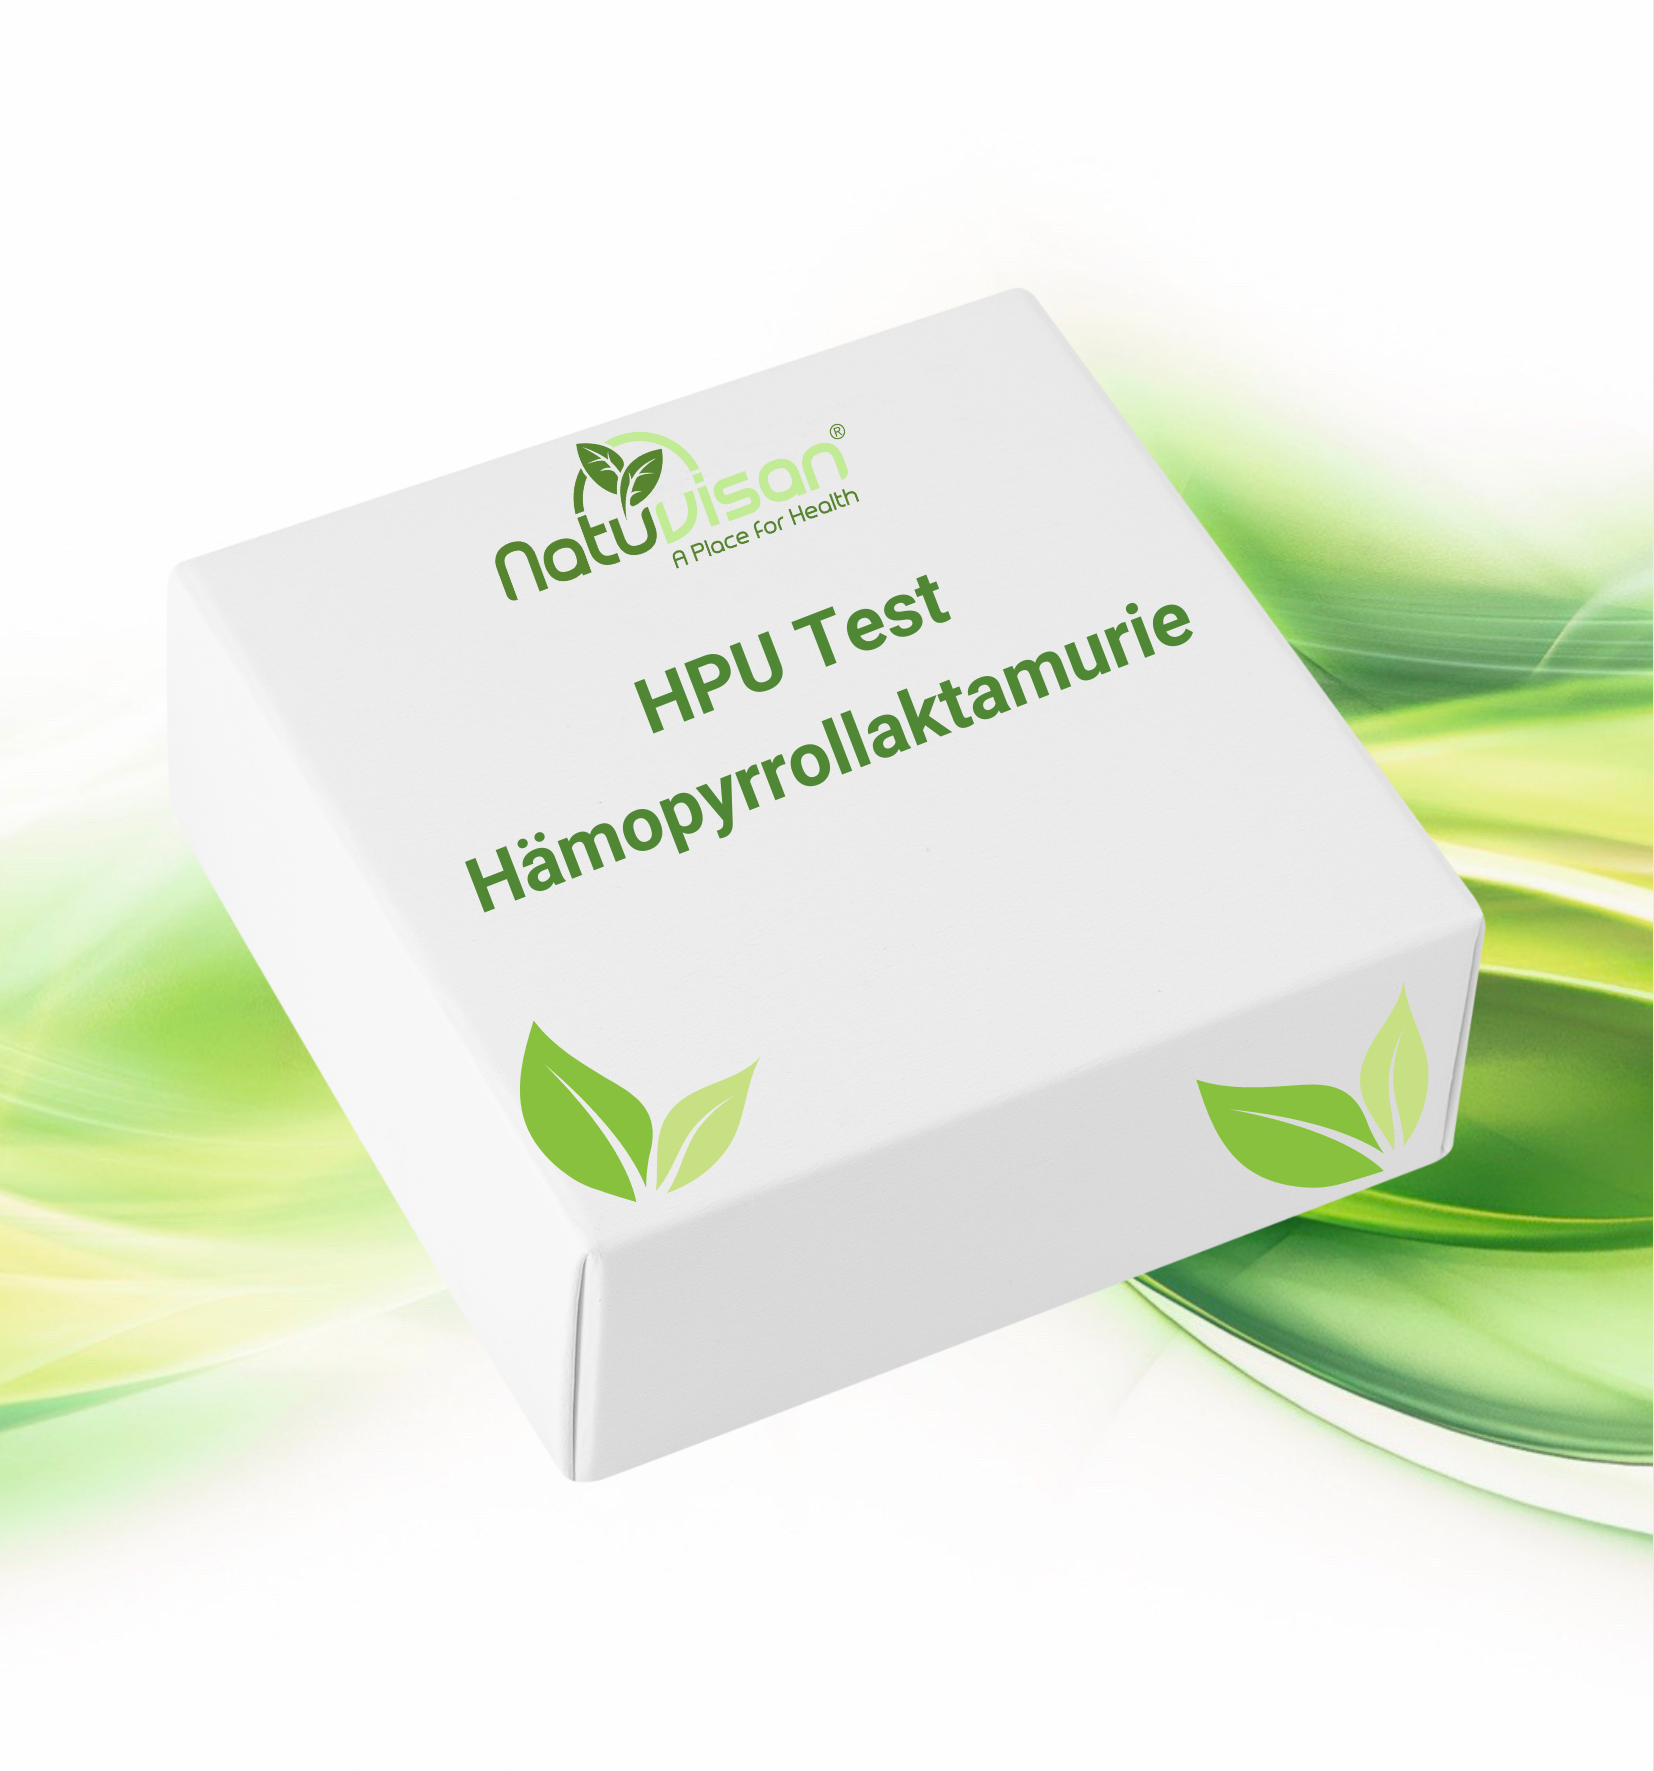 HPU - KPU Kryptopyrrolurie - Hämopyrrolurie Hämopyrollaktamurie - Urintest - Testkit für zu Hause